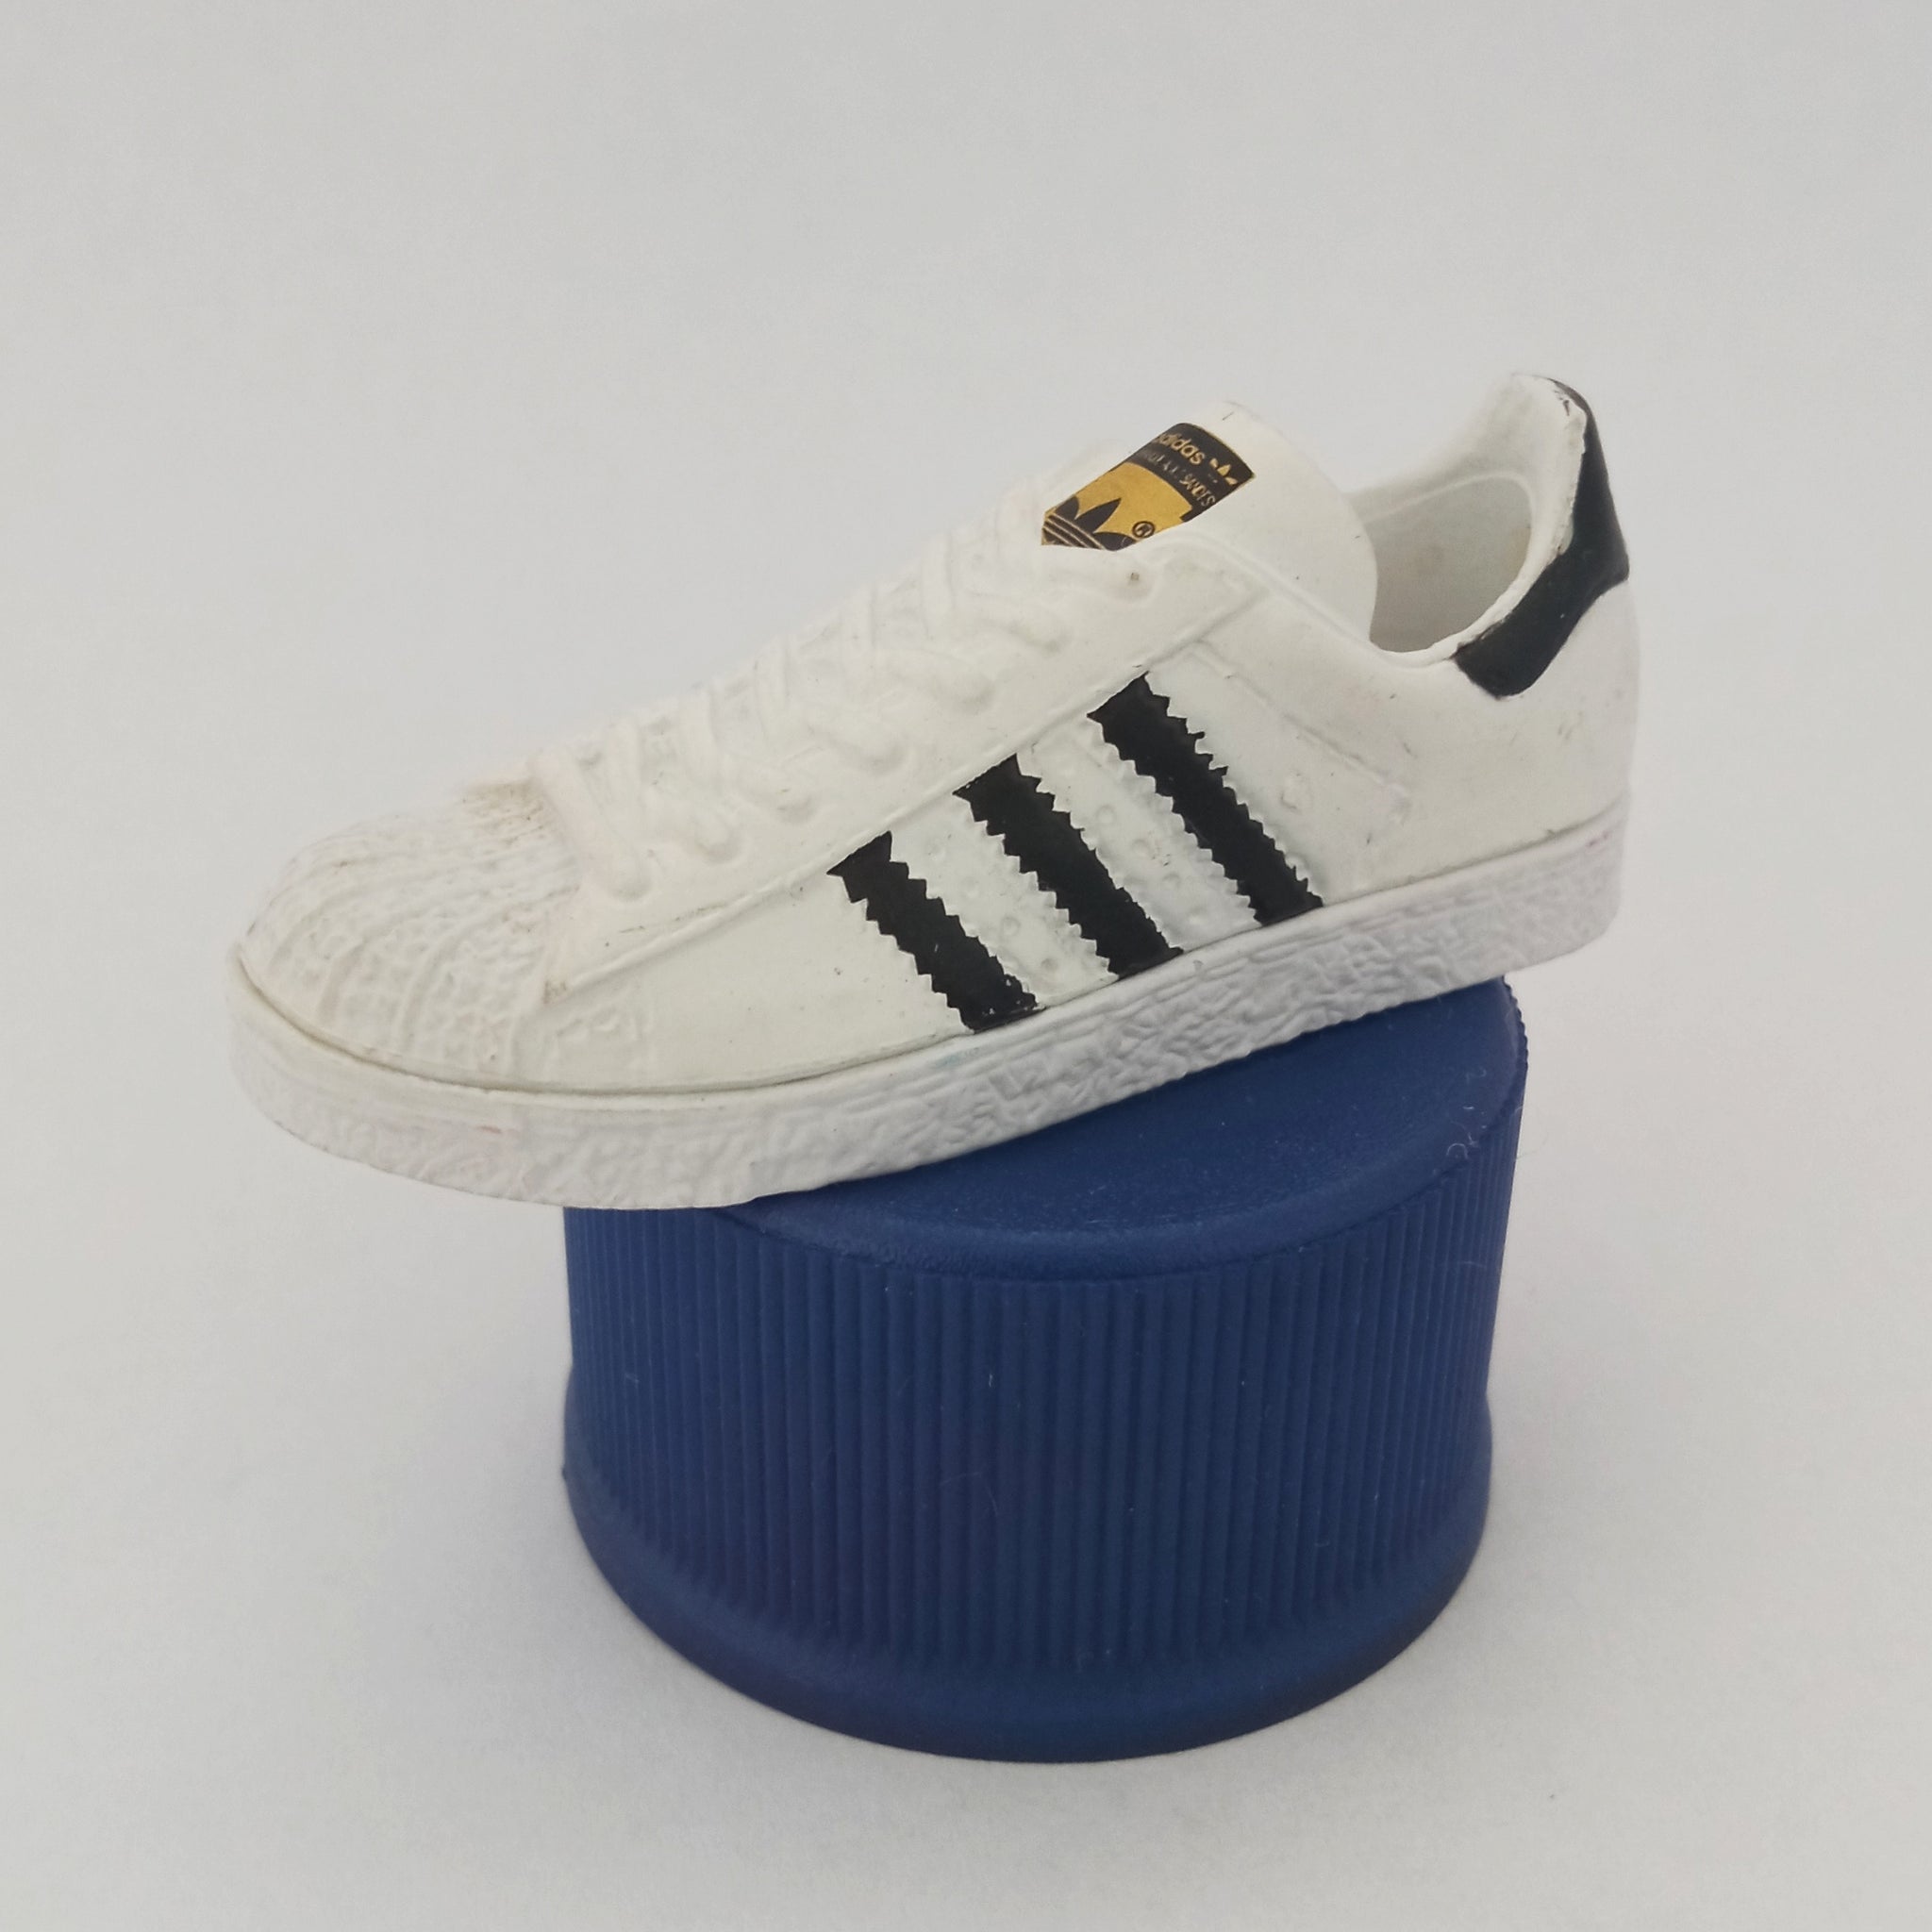 Adidas x Sneaker Bottle Cap Collection "PEPSI meets Adidas Campa – Cuchiwaii